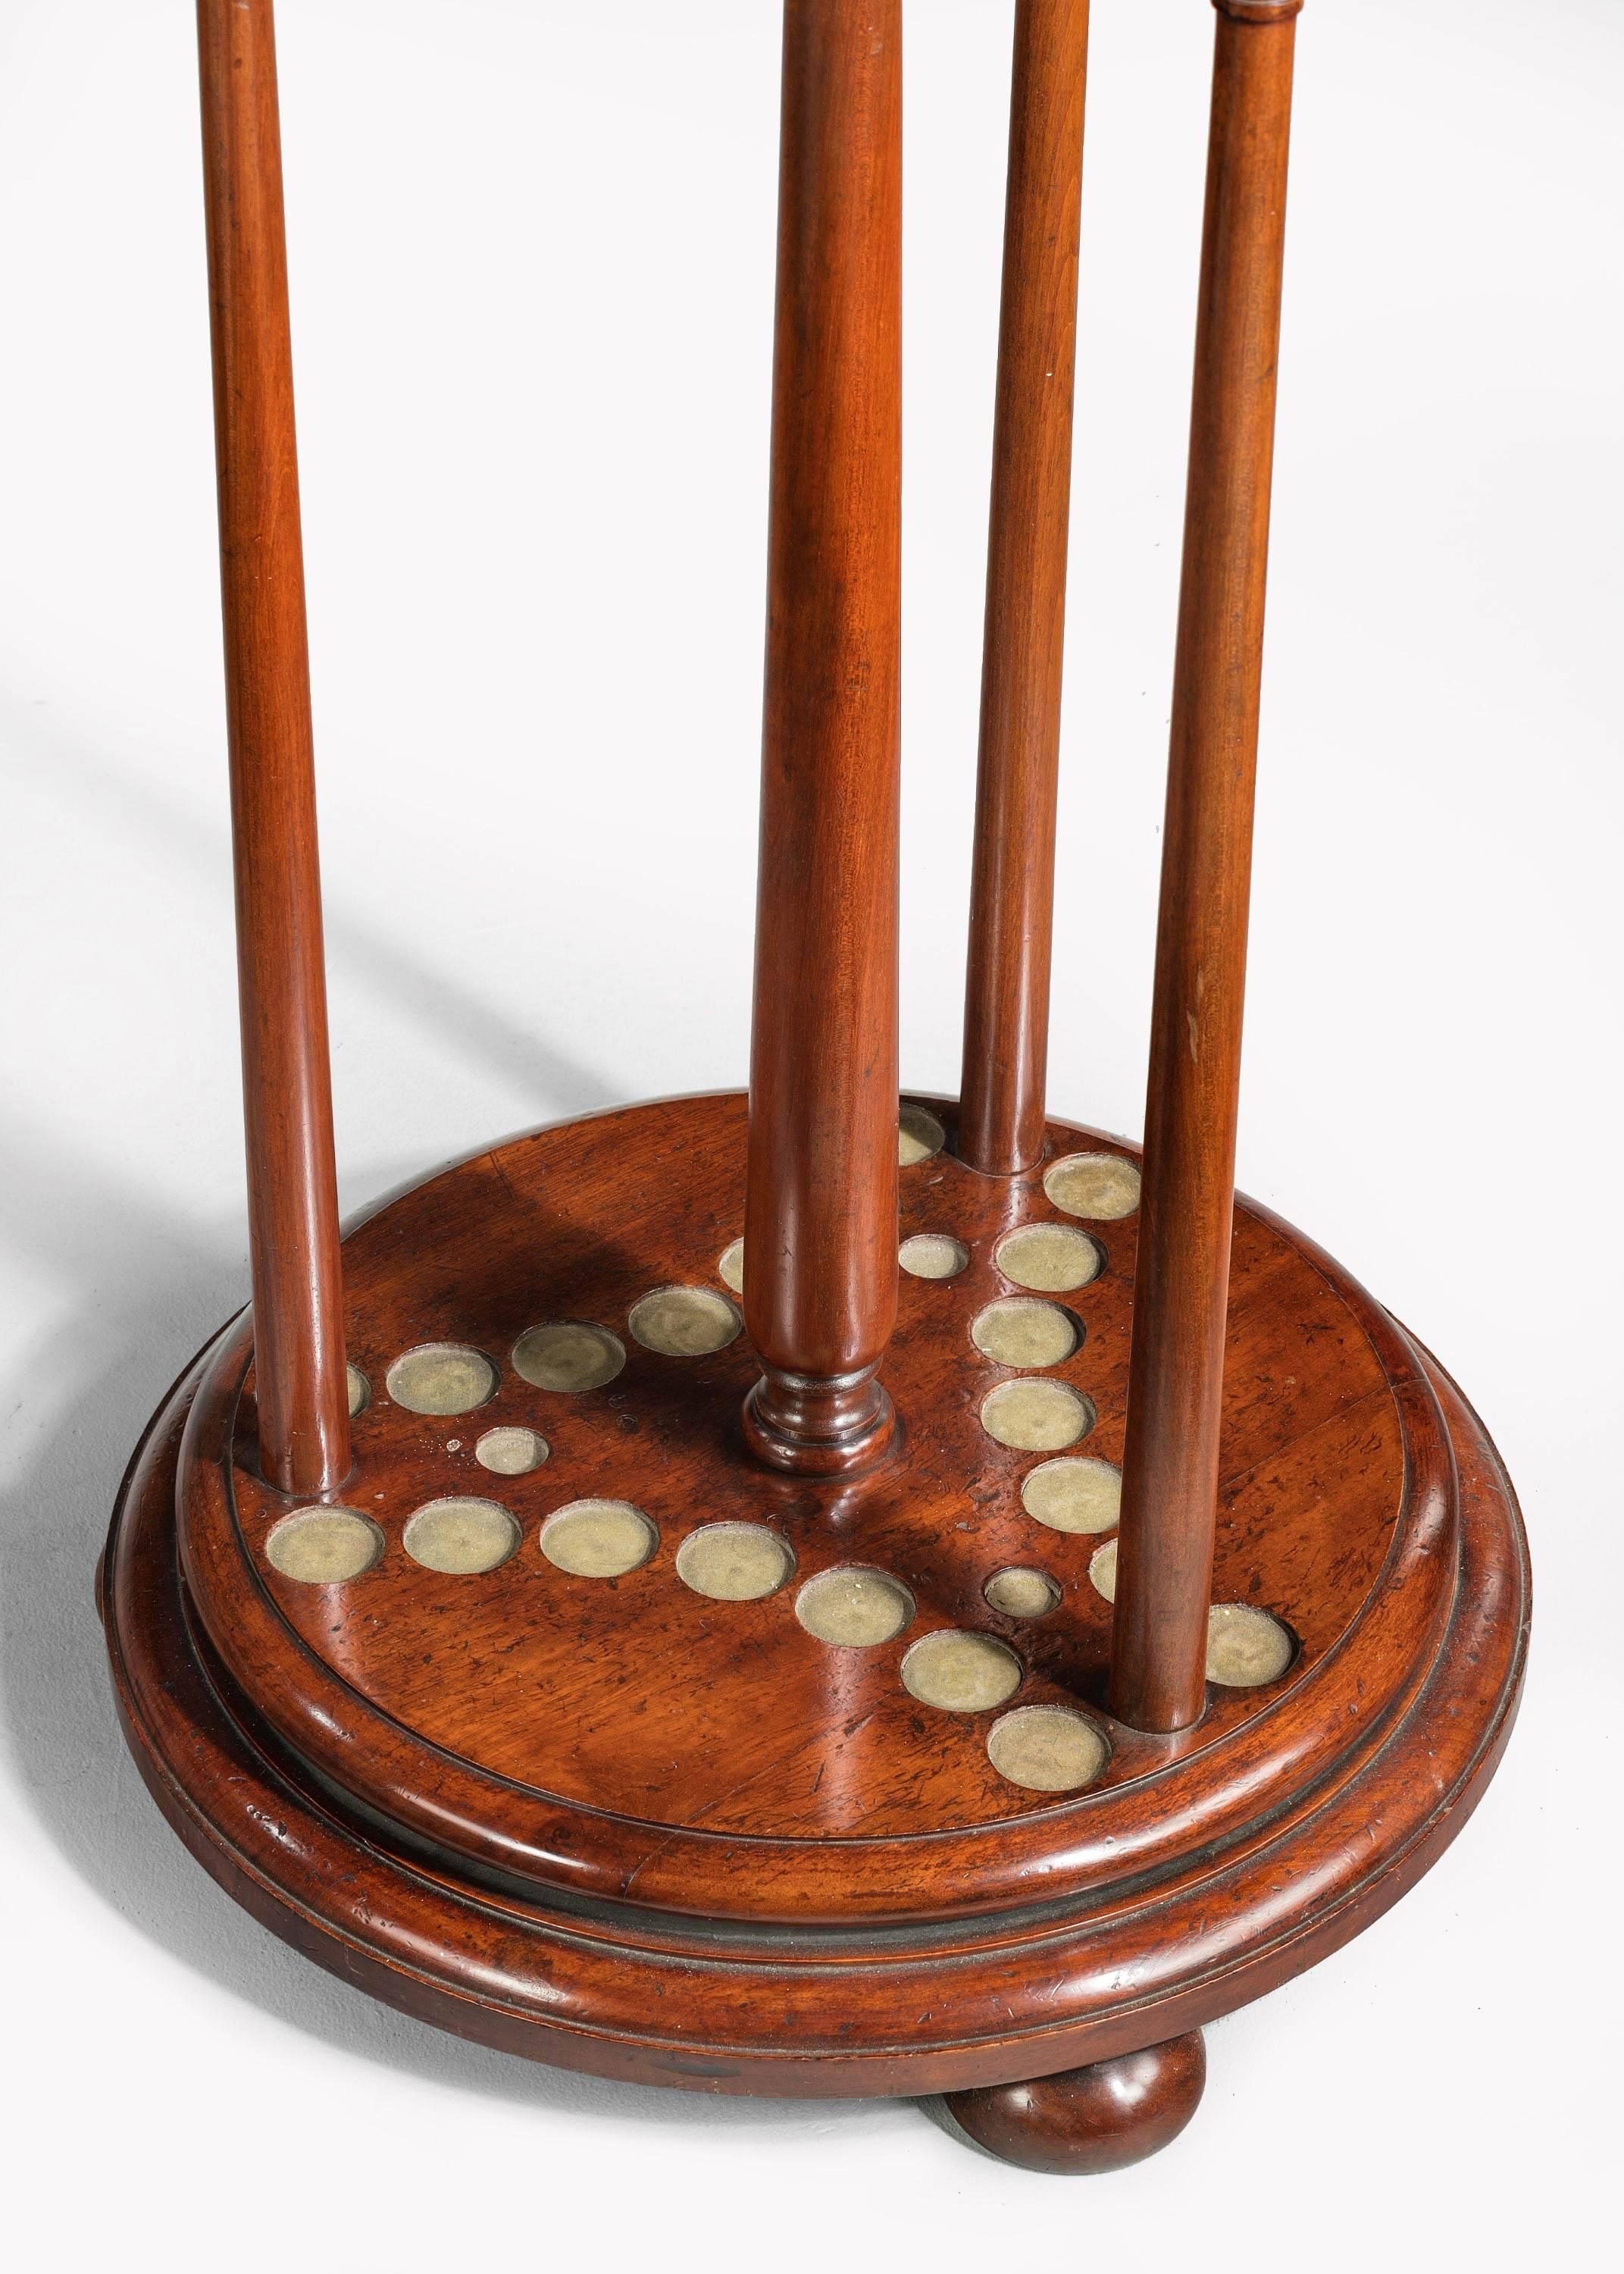 Mahogany Pair of 19th century mahogany snooker or pool cue holders